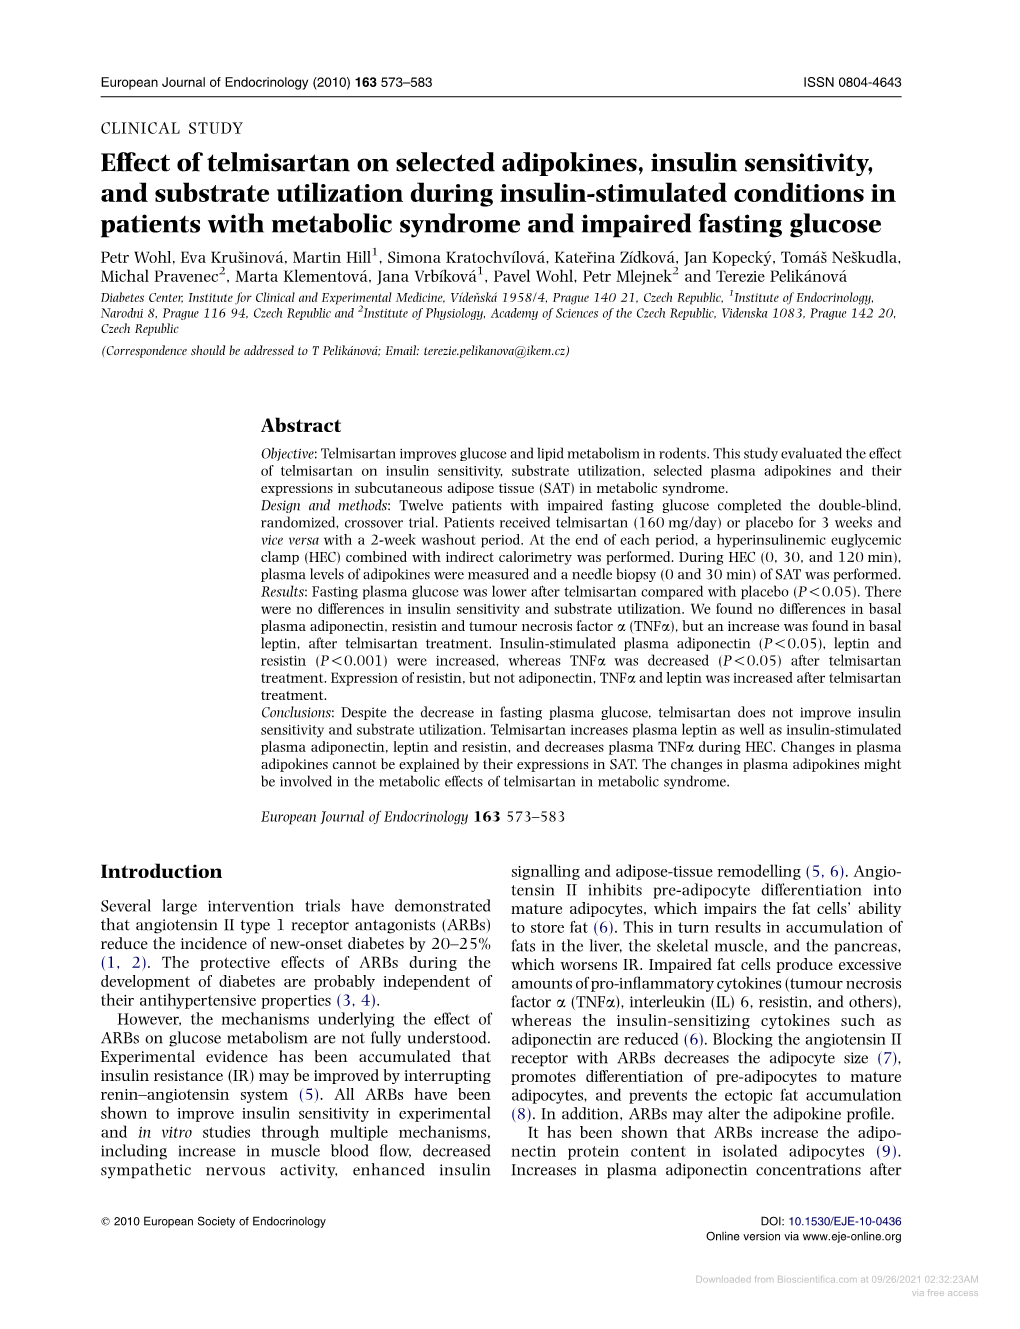 Effect of Telmisartan on Selected Adipokines, Insulin Sensitivity, And